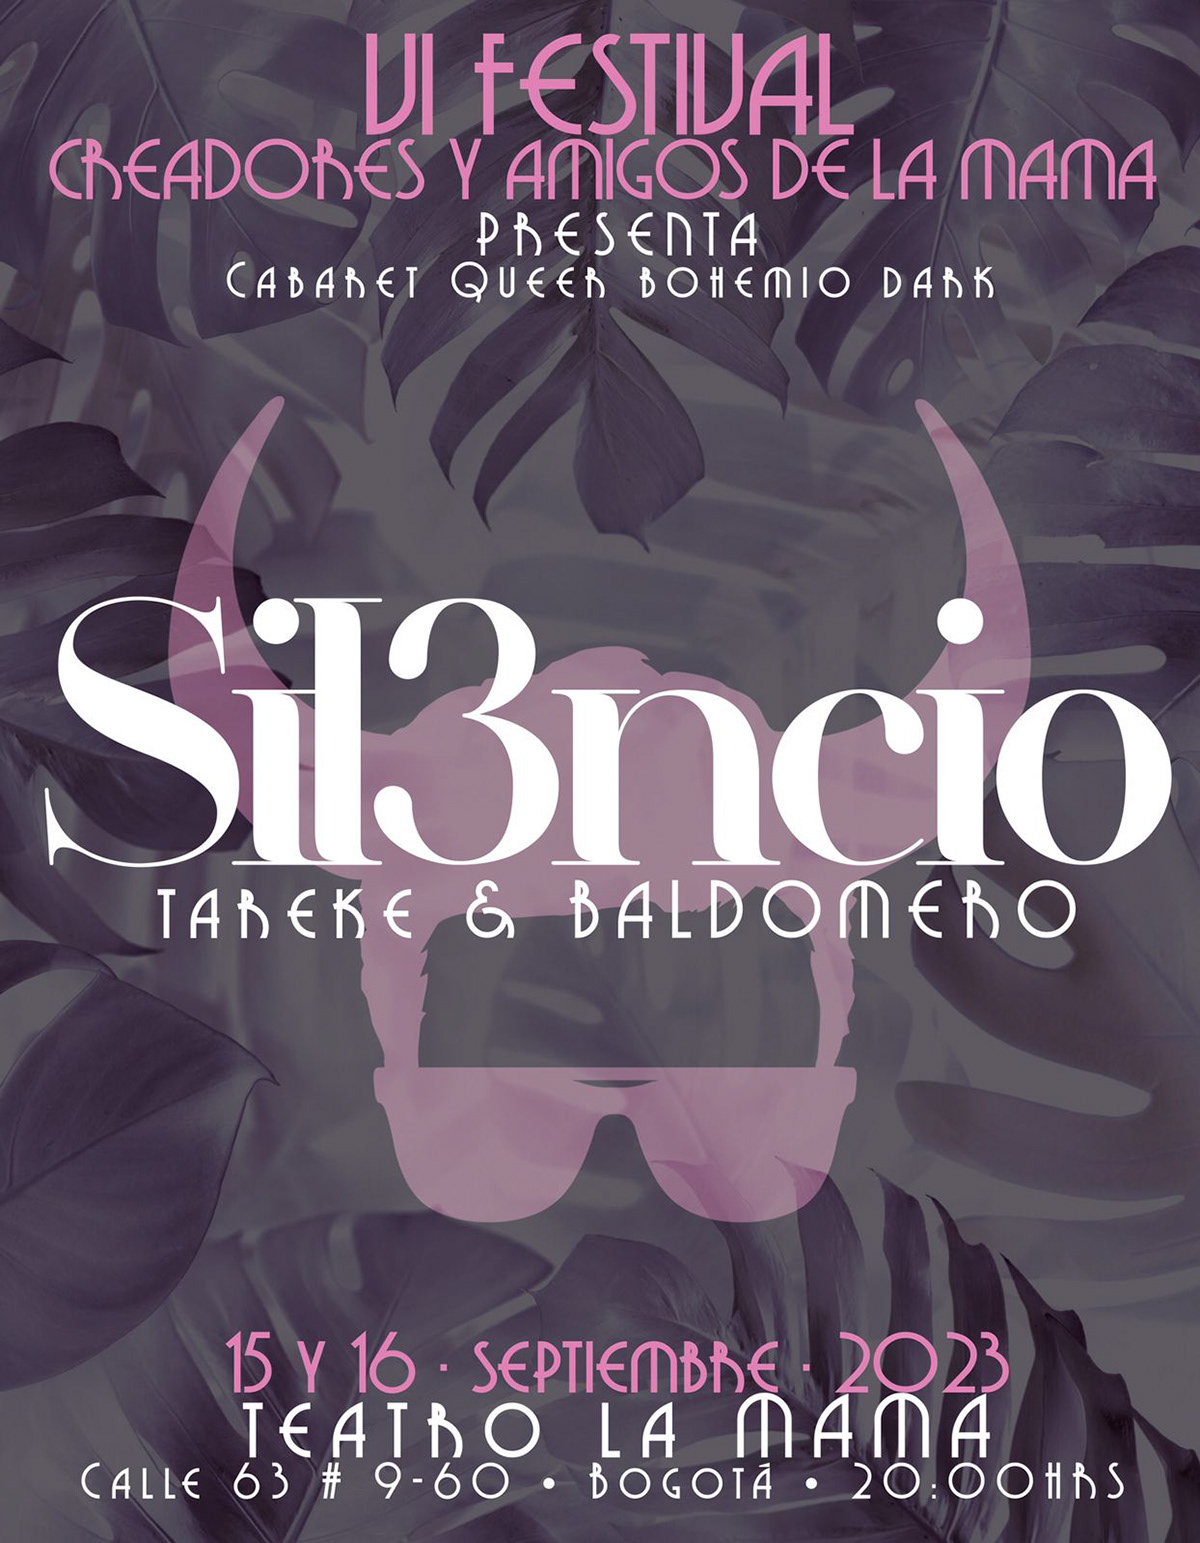 cabaret diseño cartel musica arte cabaret noir sil3ncio tareke y baldomero